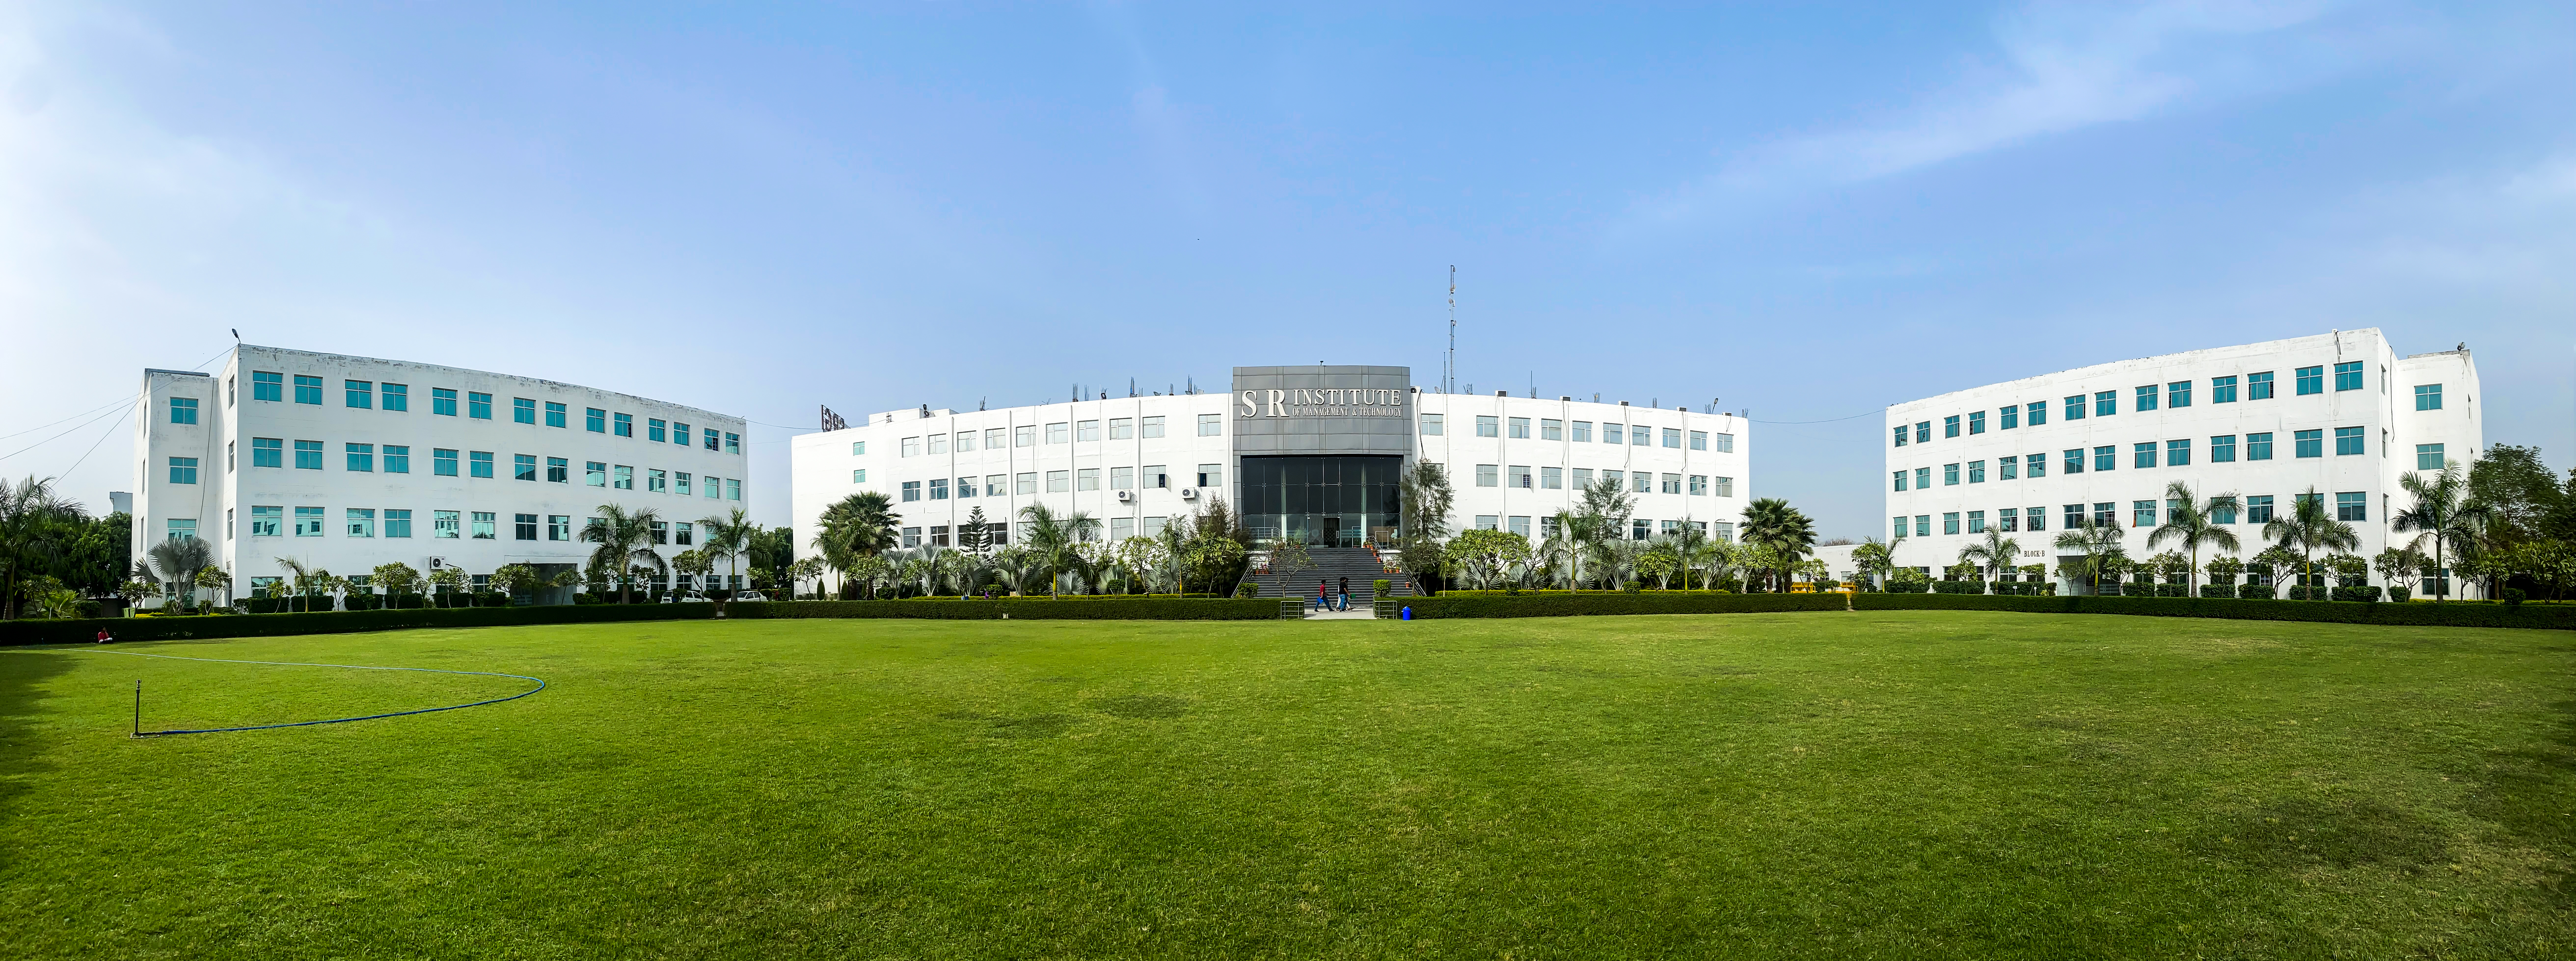 SR Institute of Management & Technology